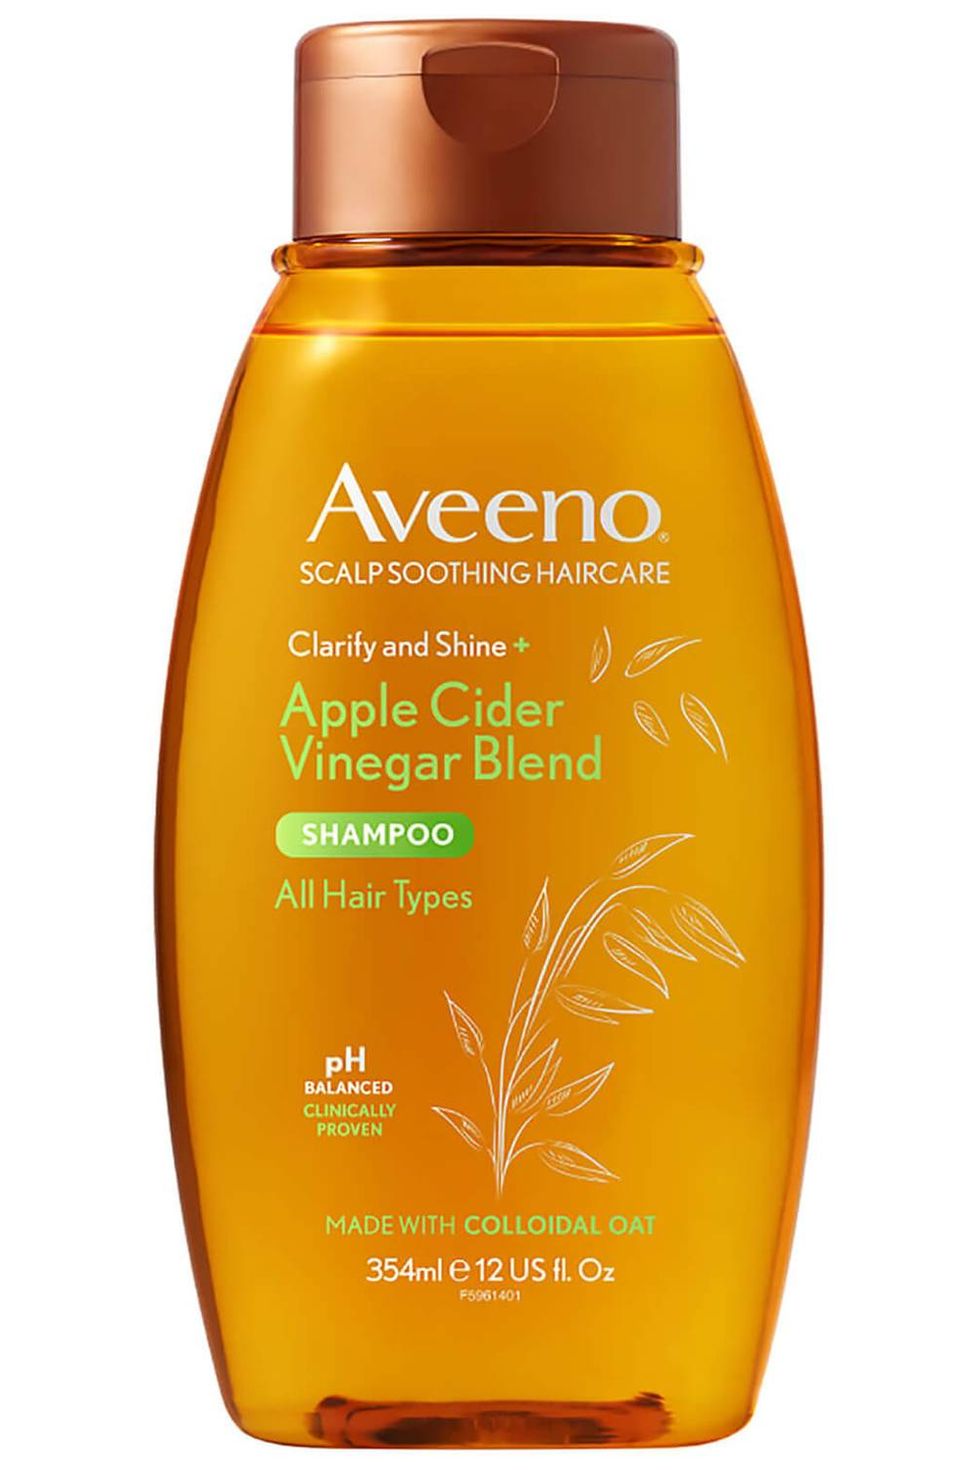 Apple Cider Vinegar Blend Clarify and Shine Shampoo